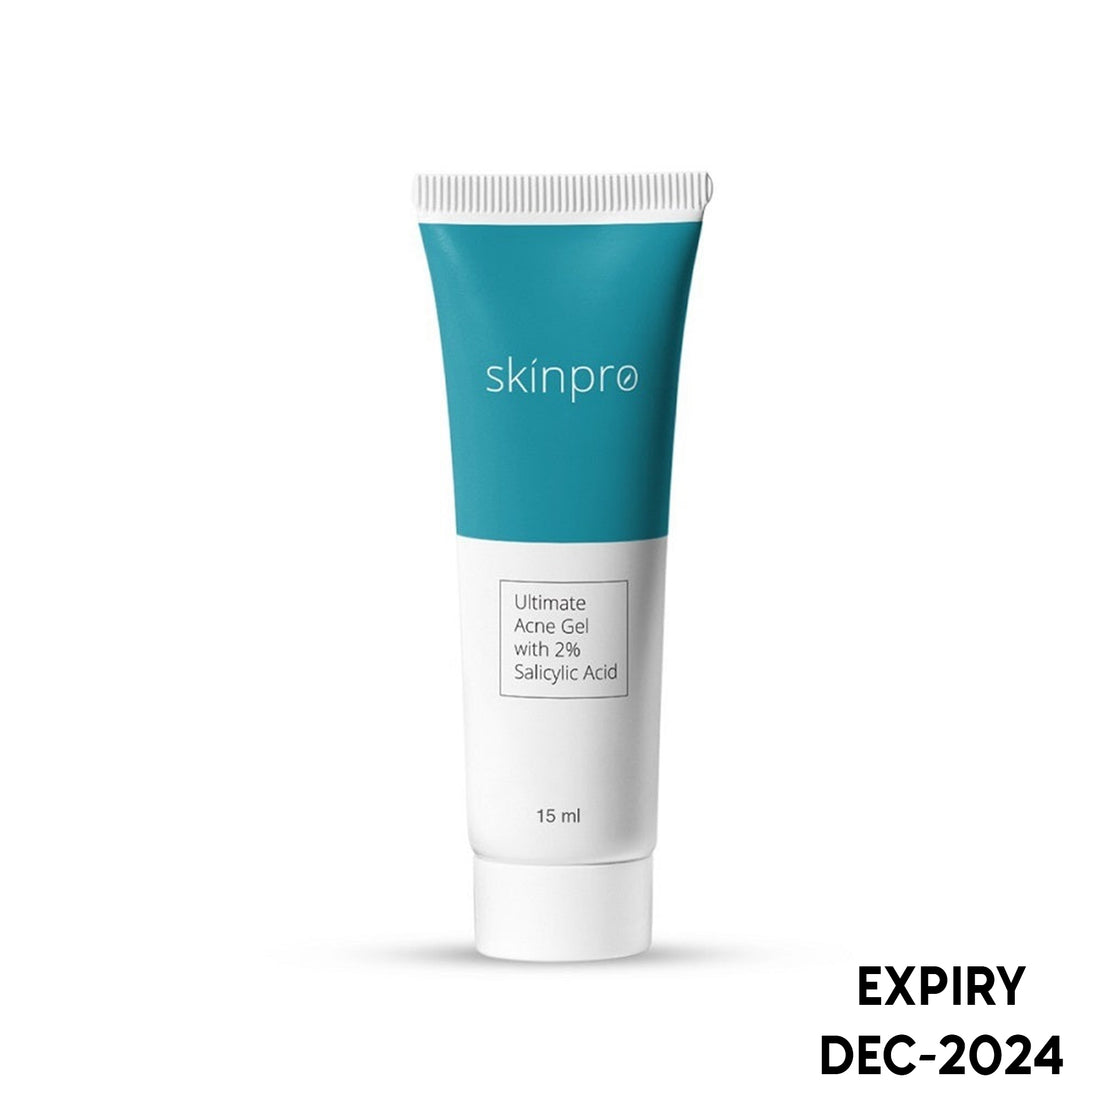 Skinpro Ultimate Acne Gel with 2% Salicylic Acid (15ml)